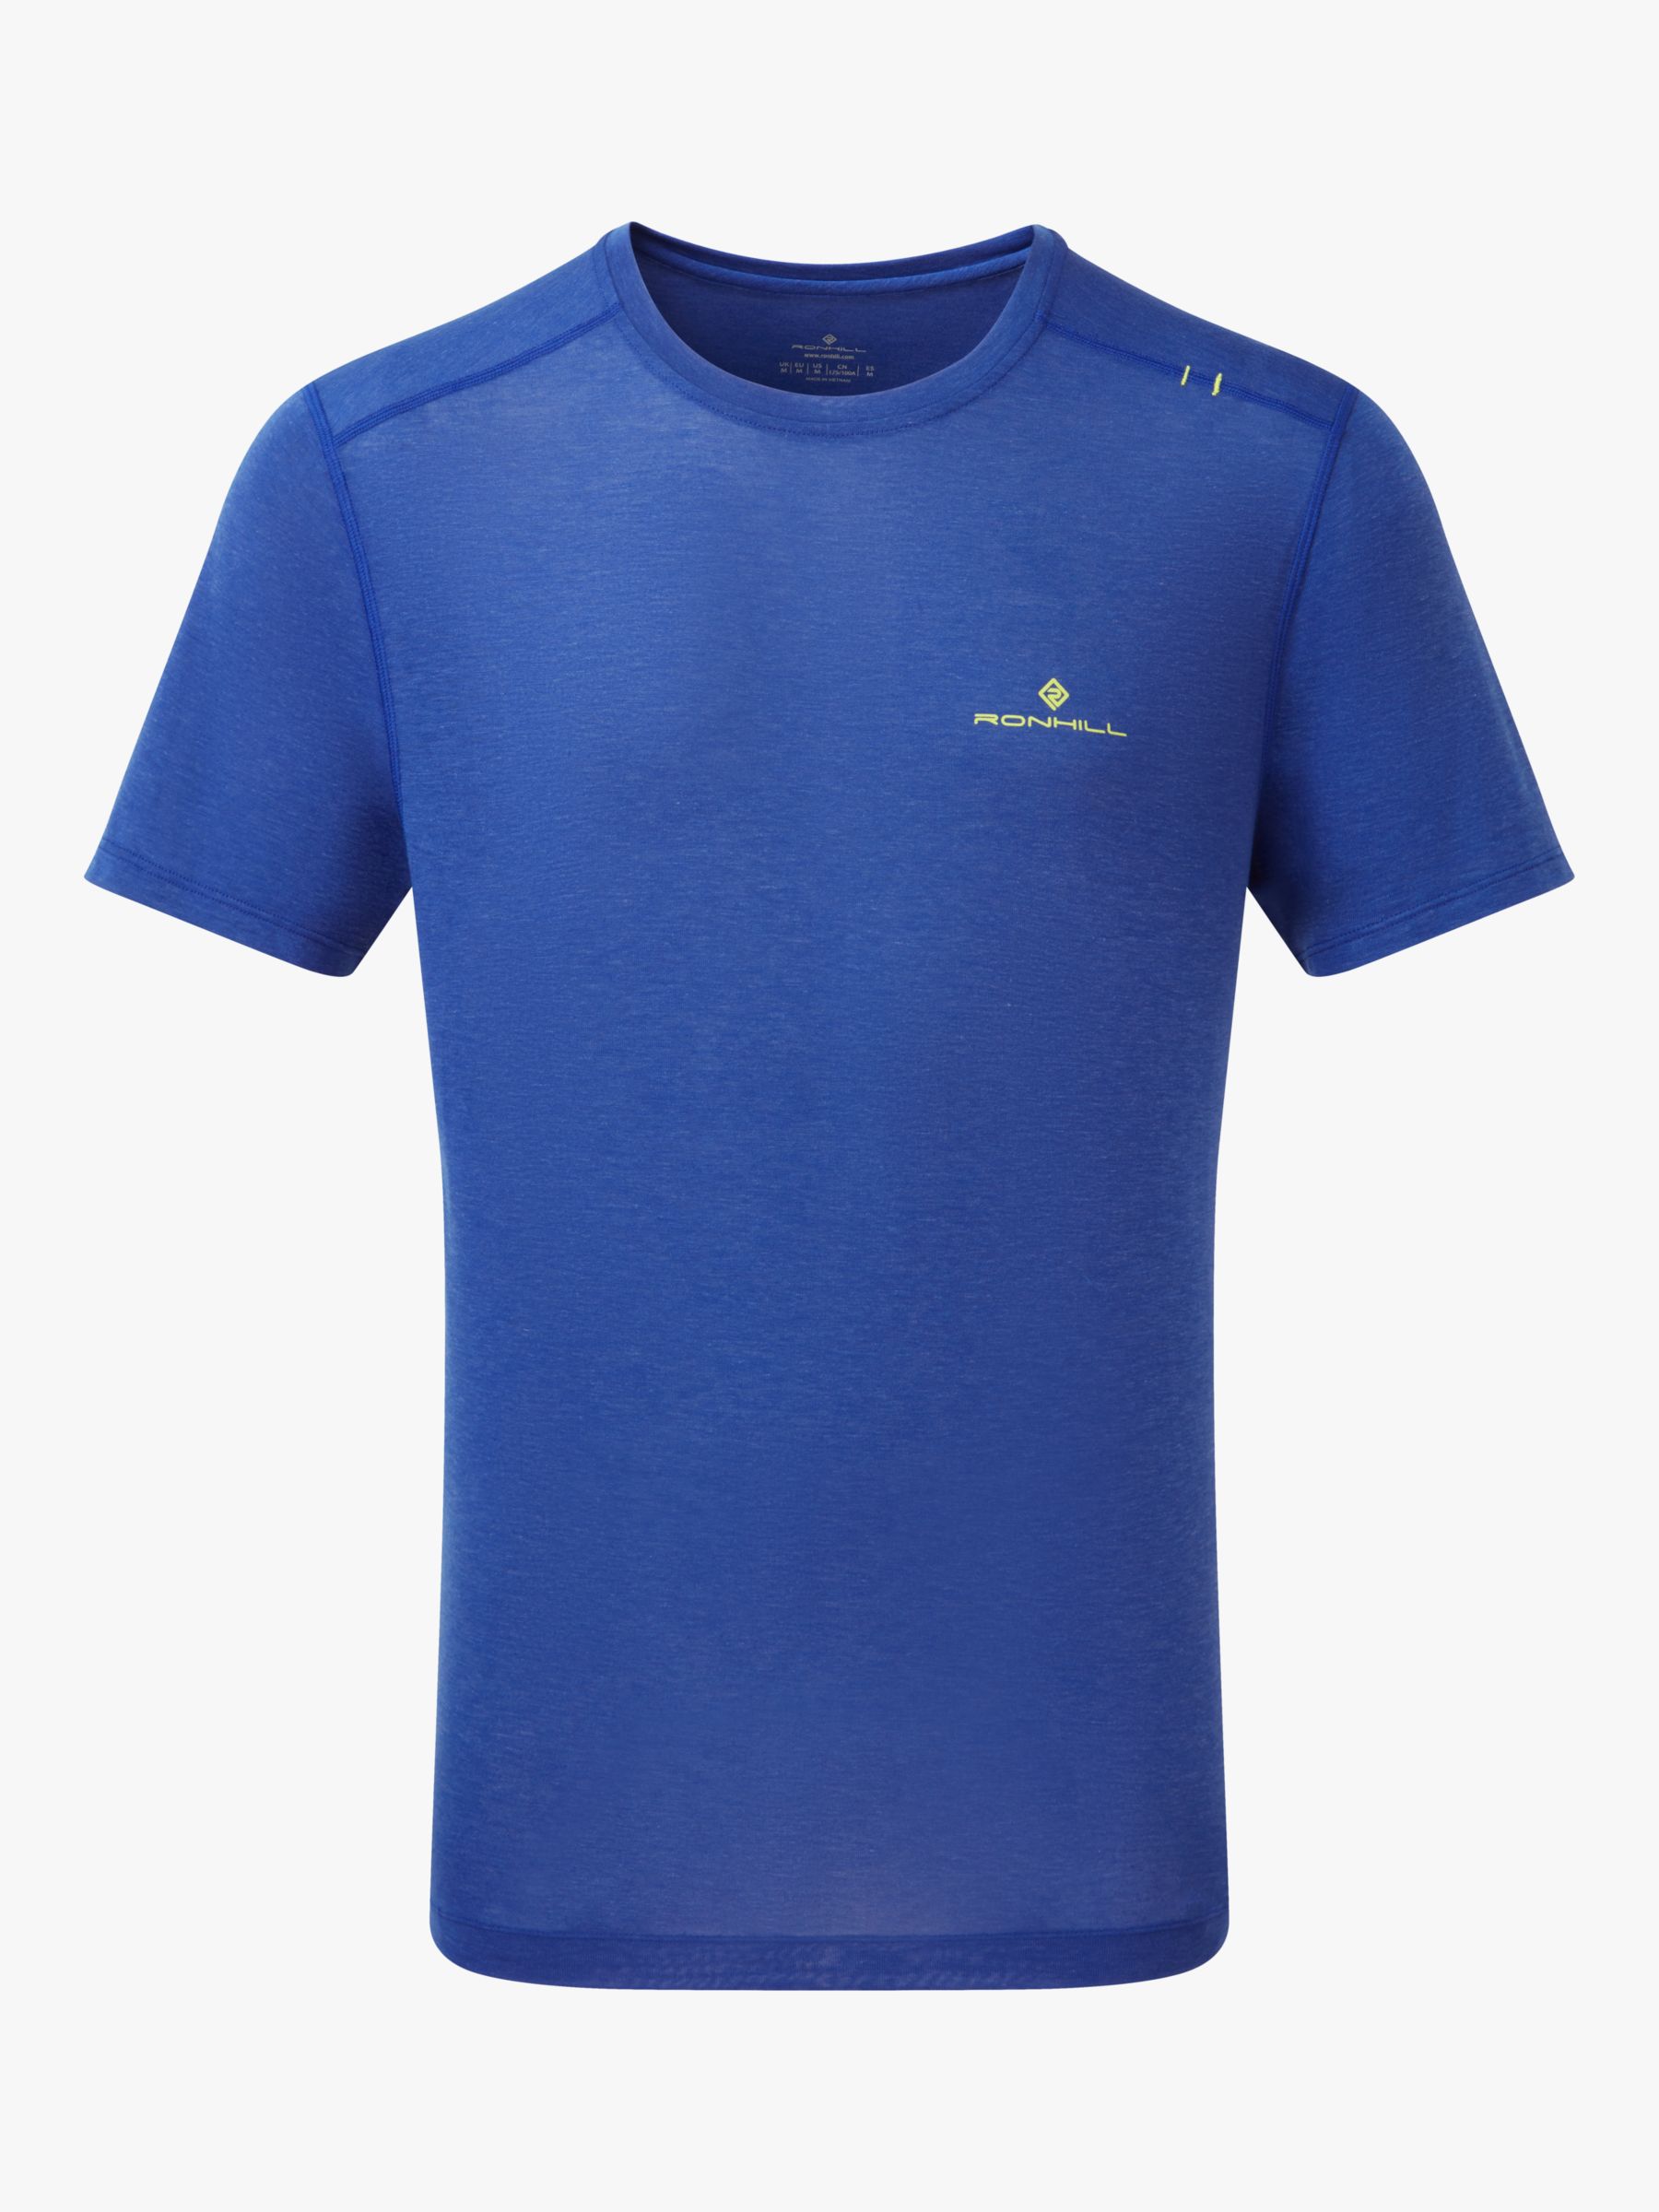 Ronhill Performance T-Shirt, Blue, L